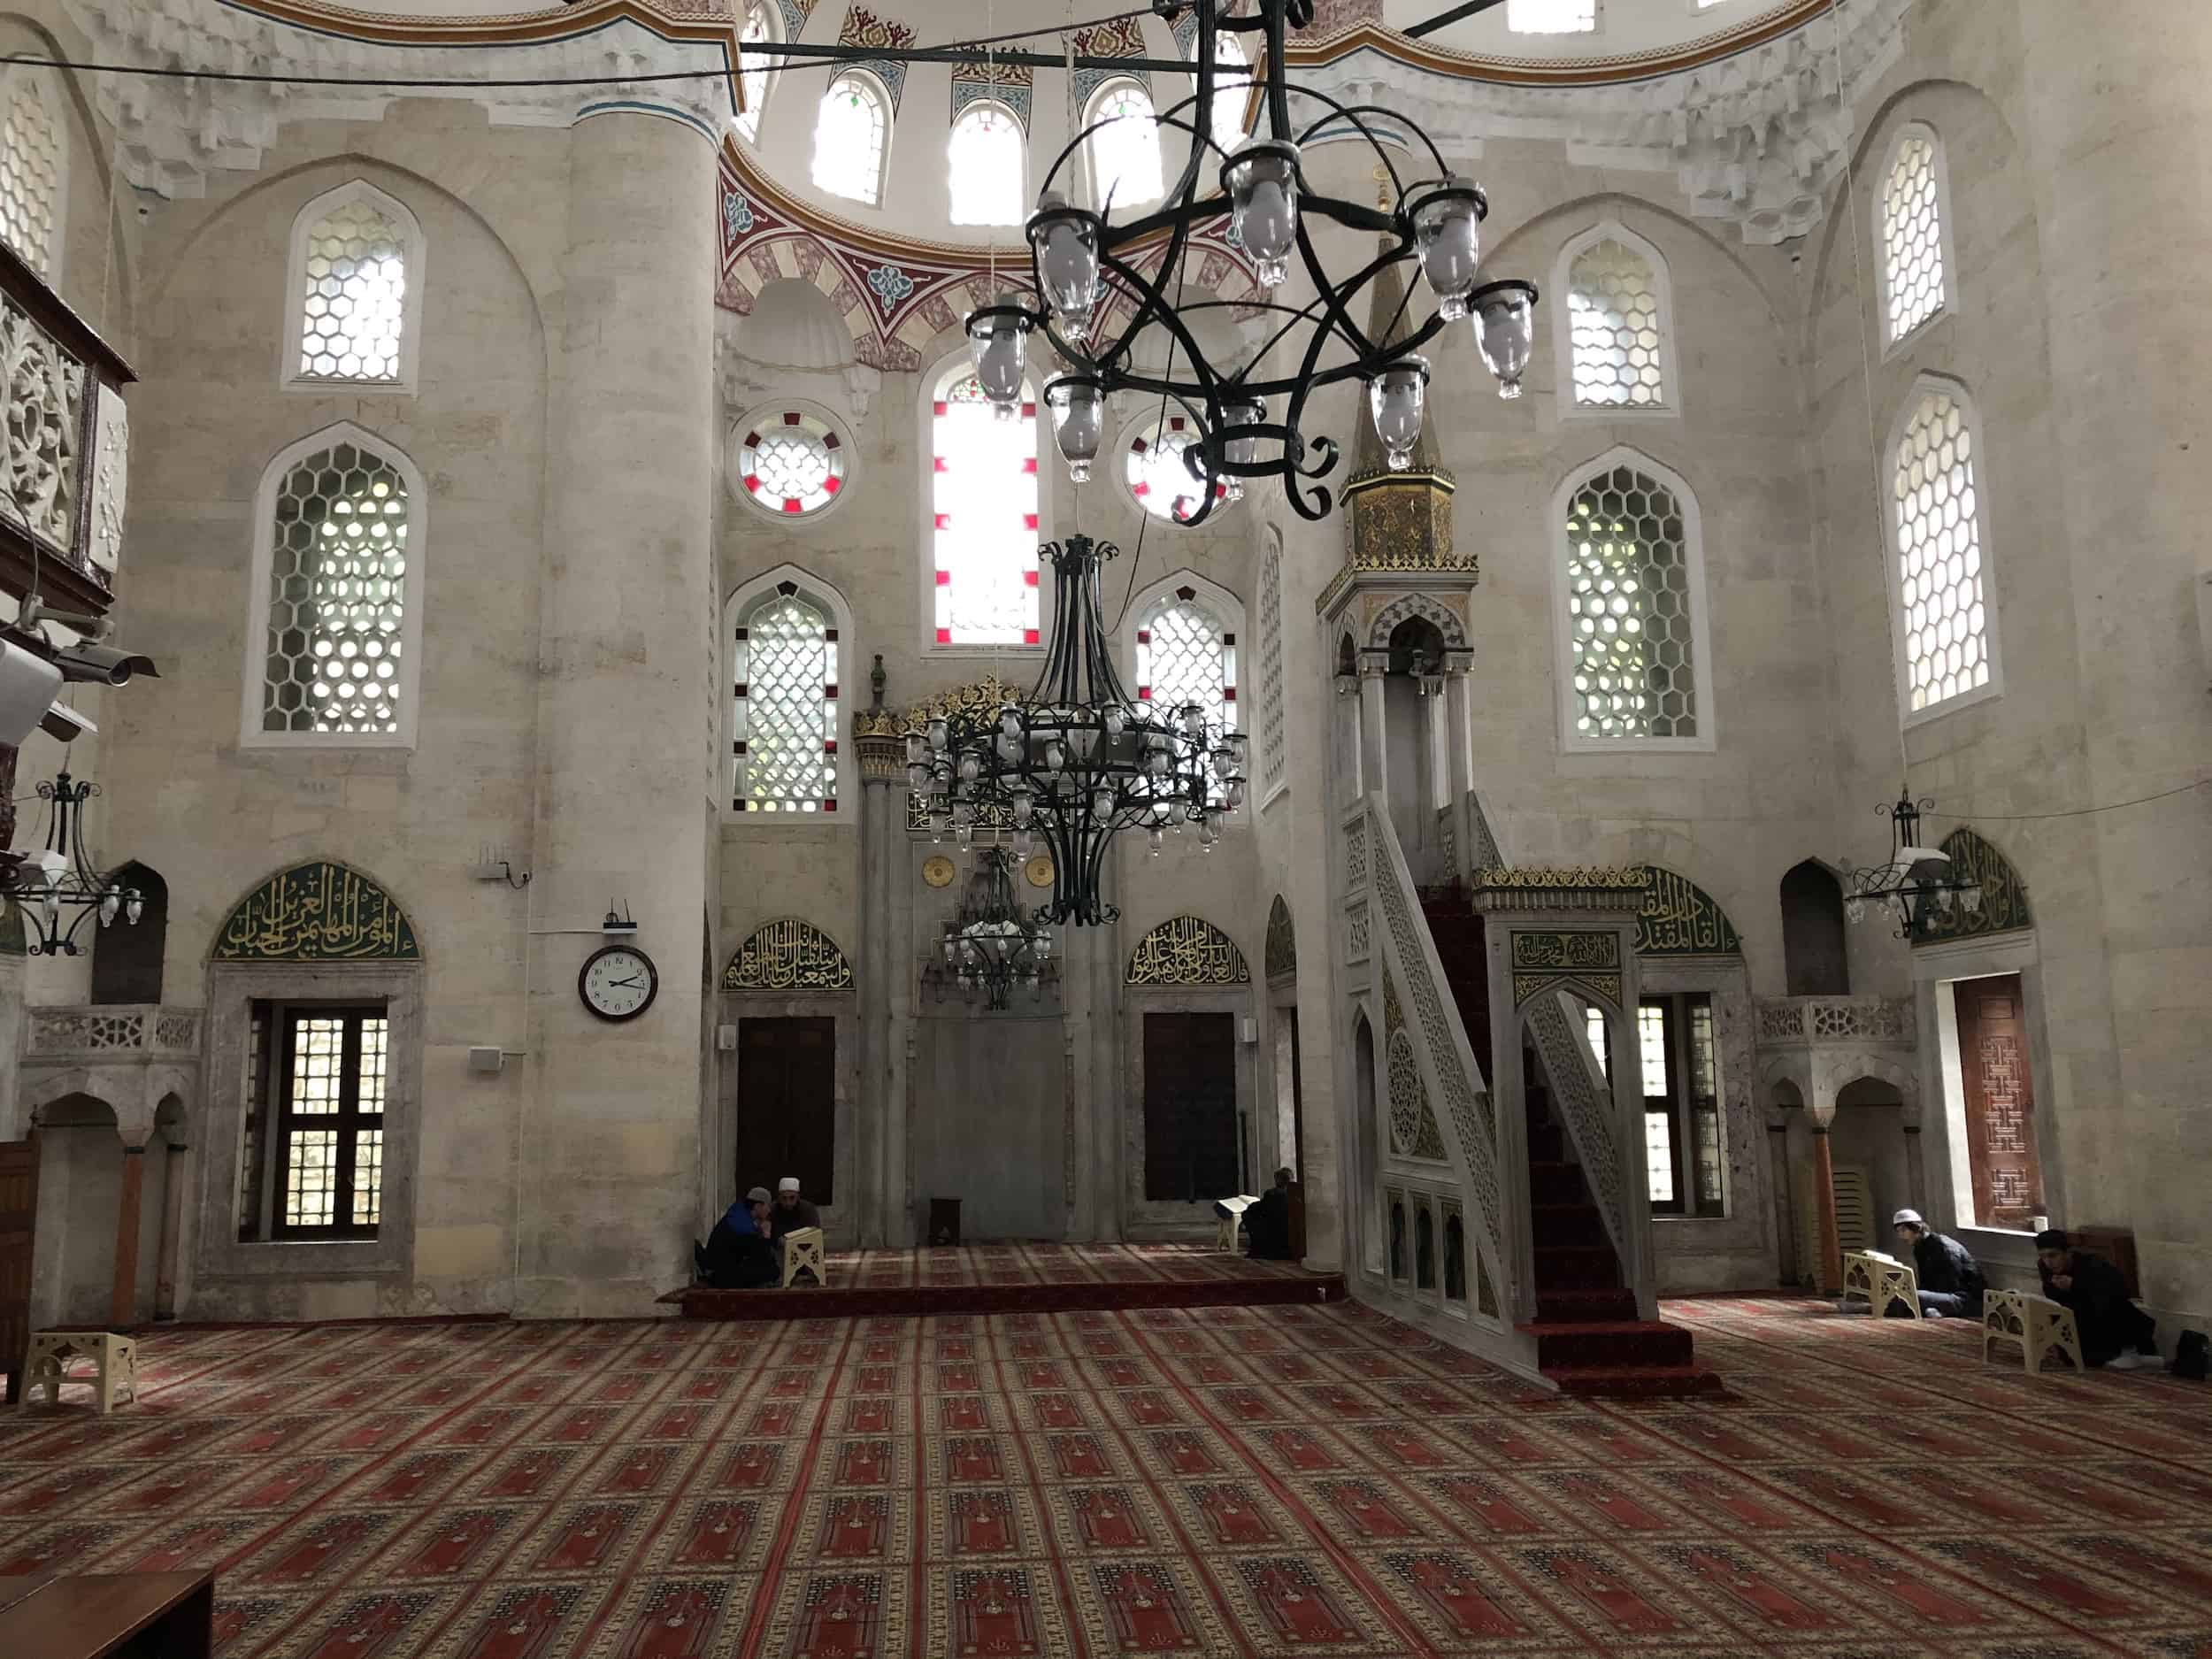 Prayer hall of the Nişancı Mehmed Pasha Mosque in Fatih, Istanbul, Turkey